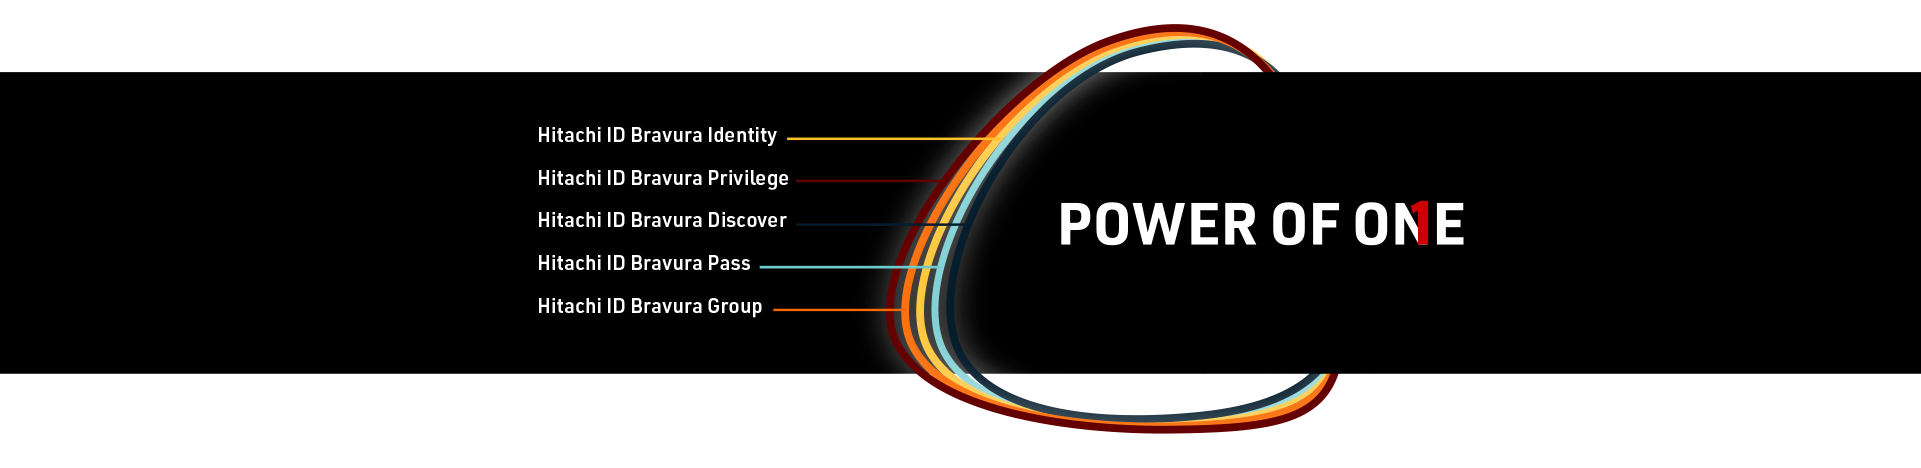 Power_of_One_Framework3